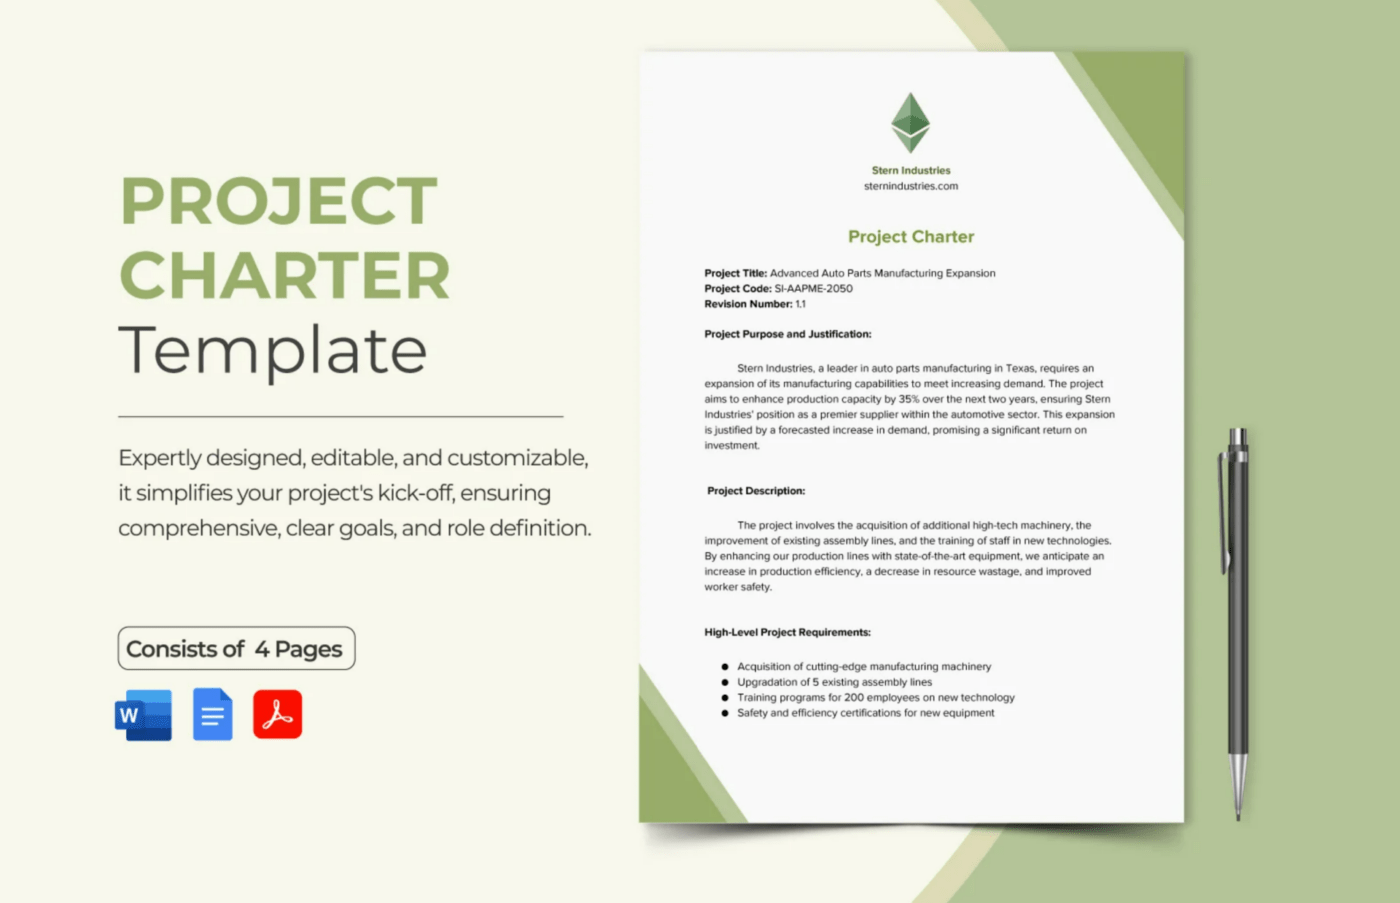 Template.net's Project Charter template